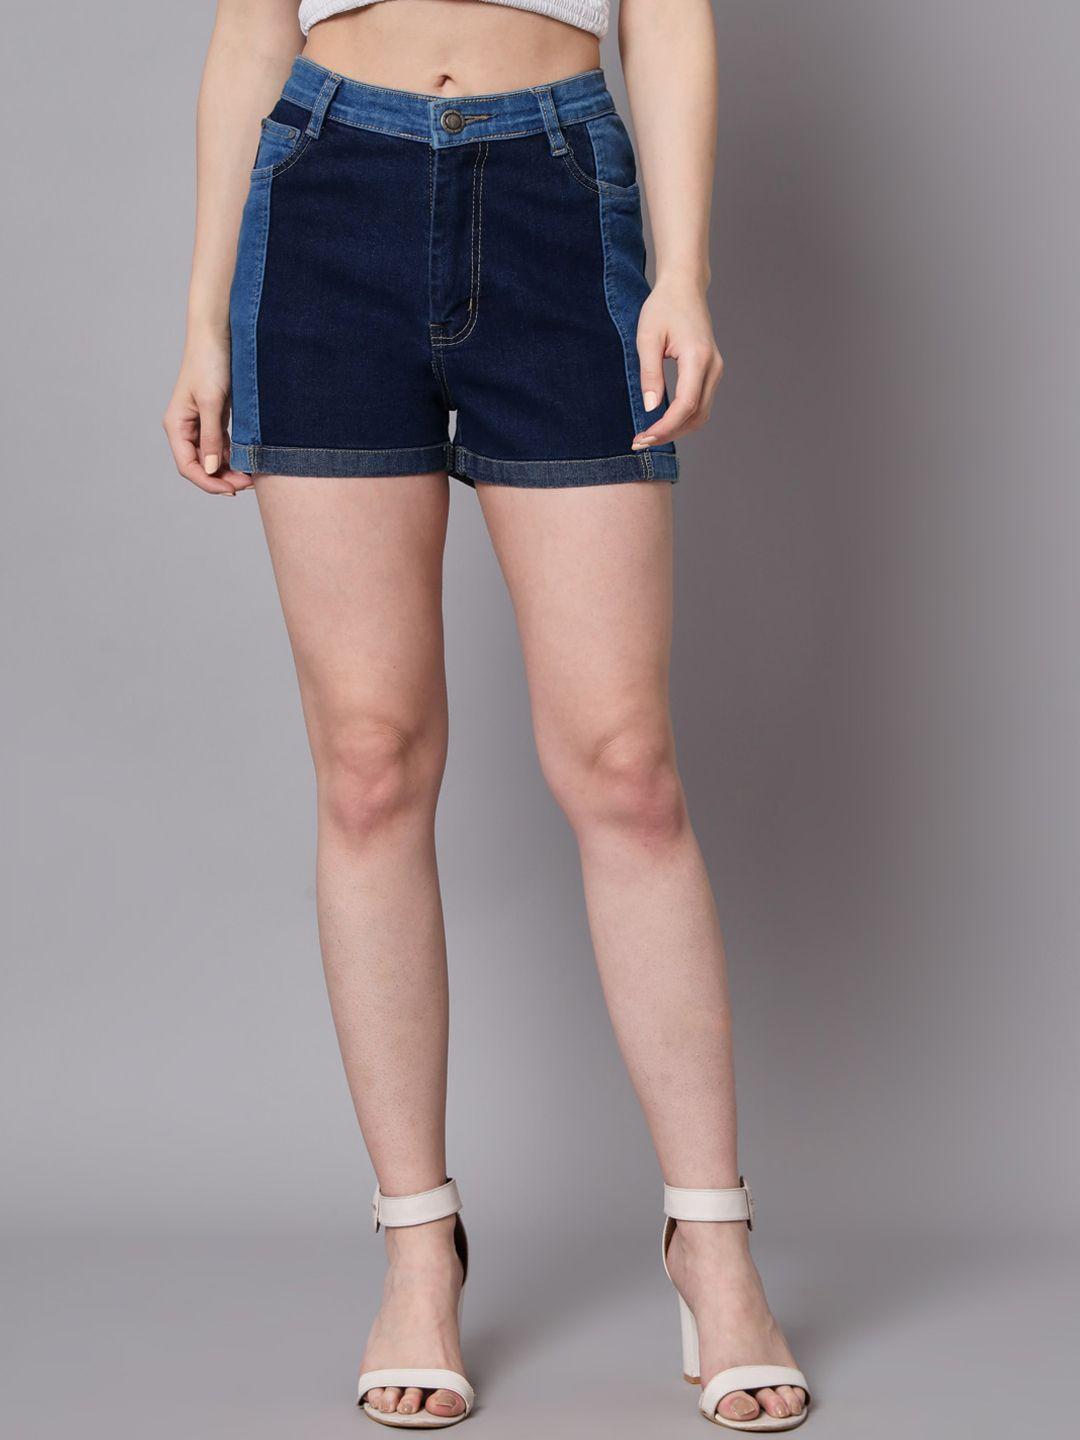 the-dry-state-women-skinny-fit-high-rise-denim-denim-shorts